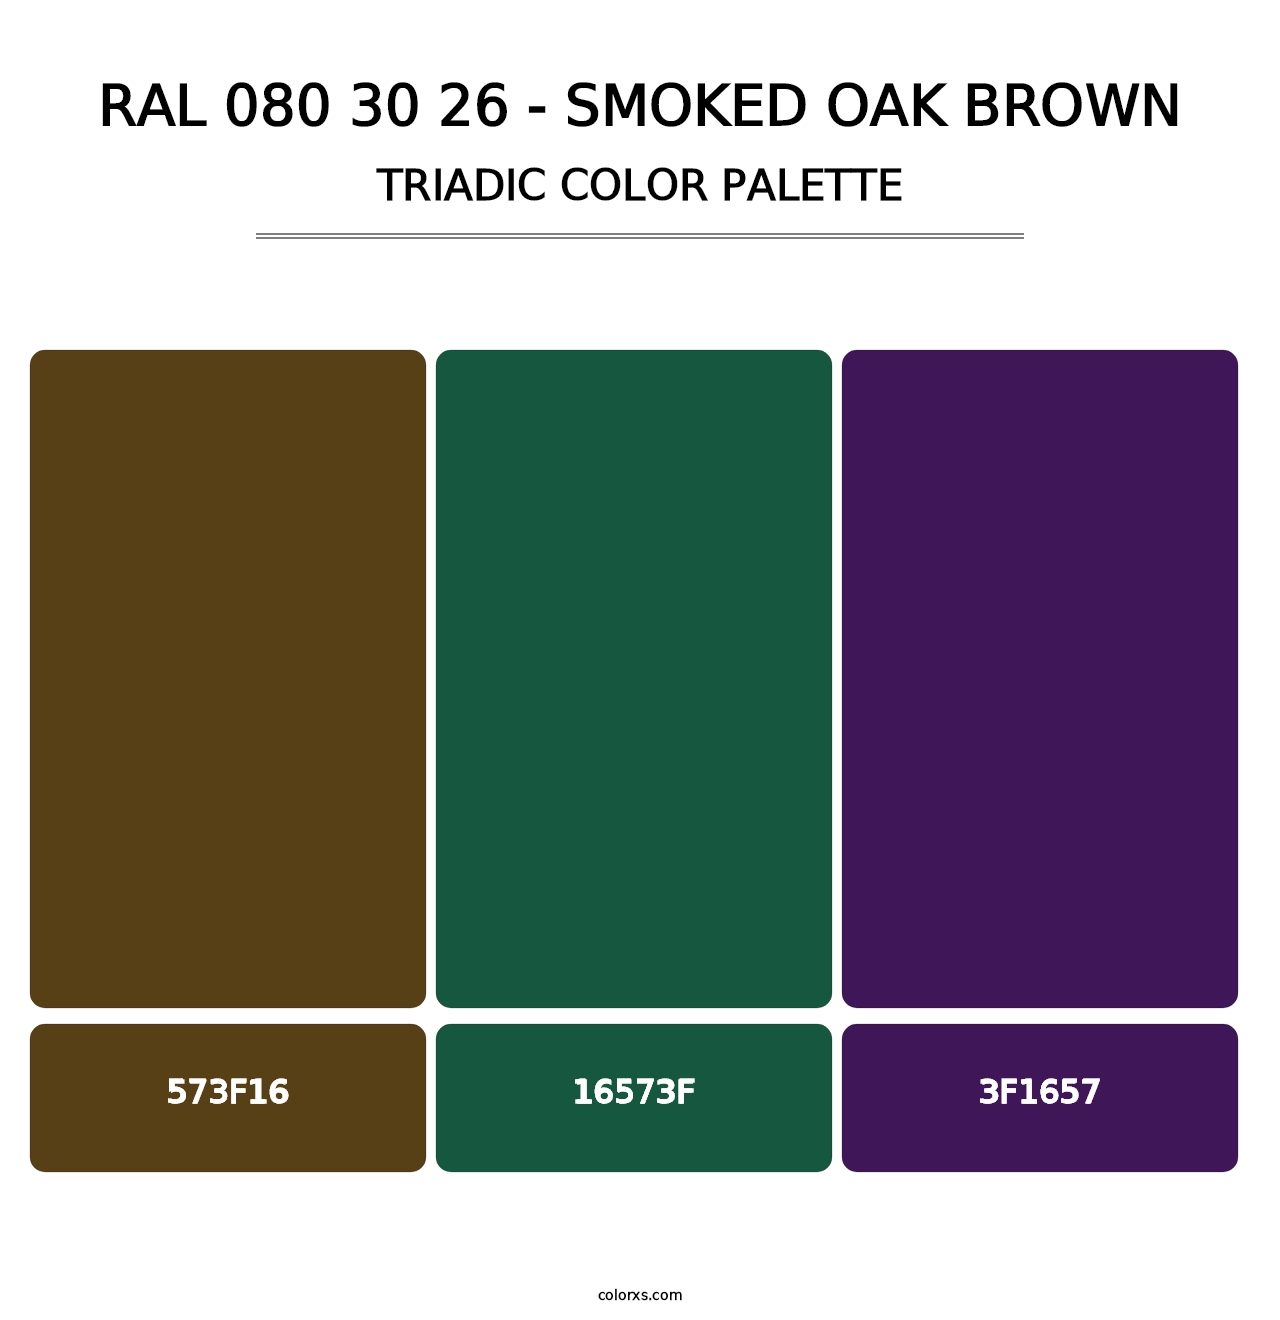 RAL 080 30 26 - Smoked Oak Brown - Triadic Color Palette